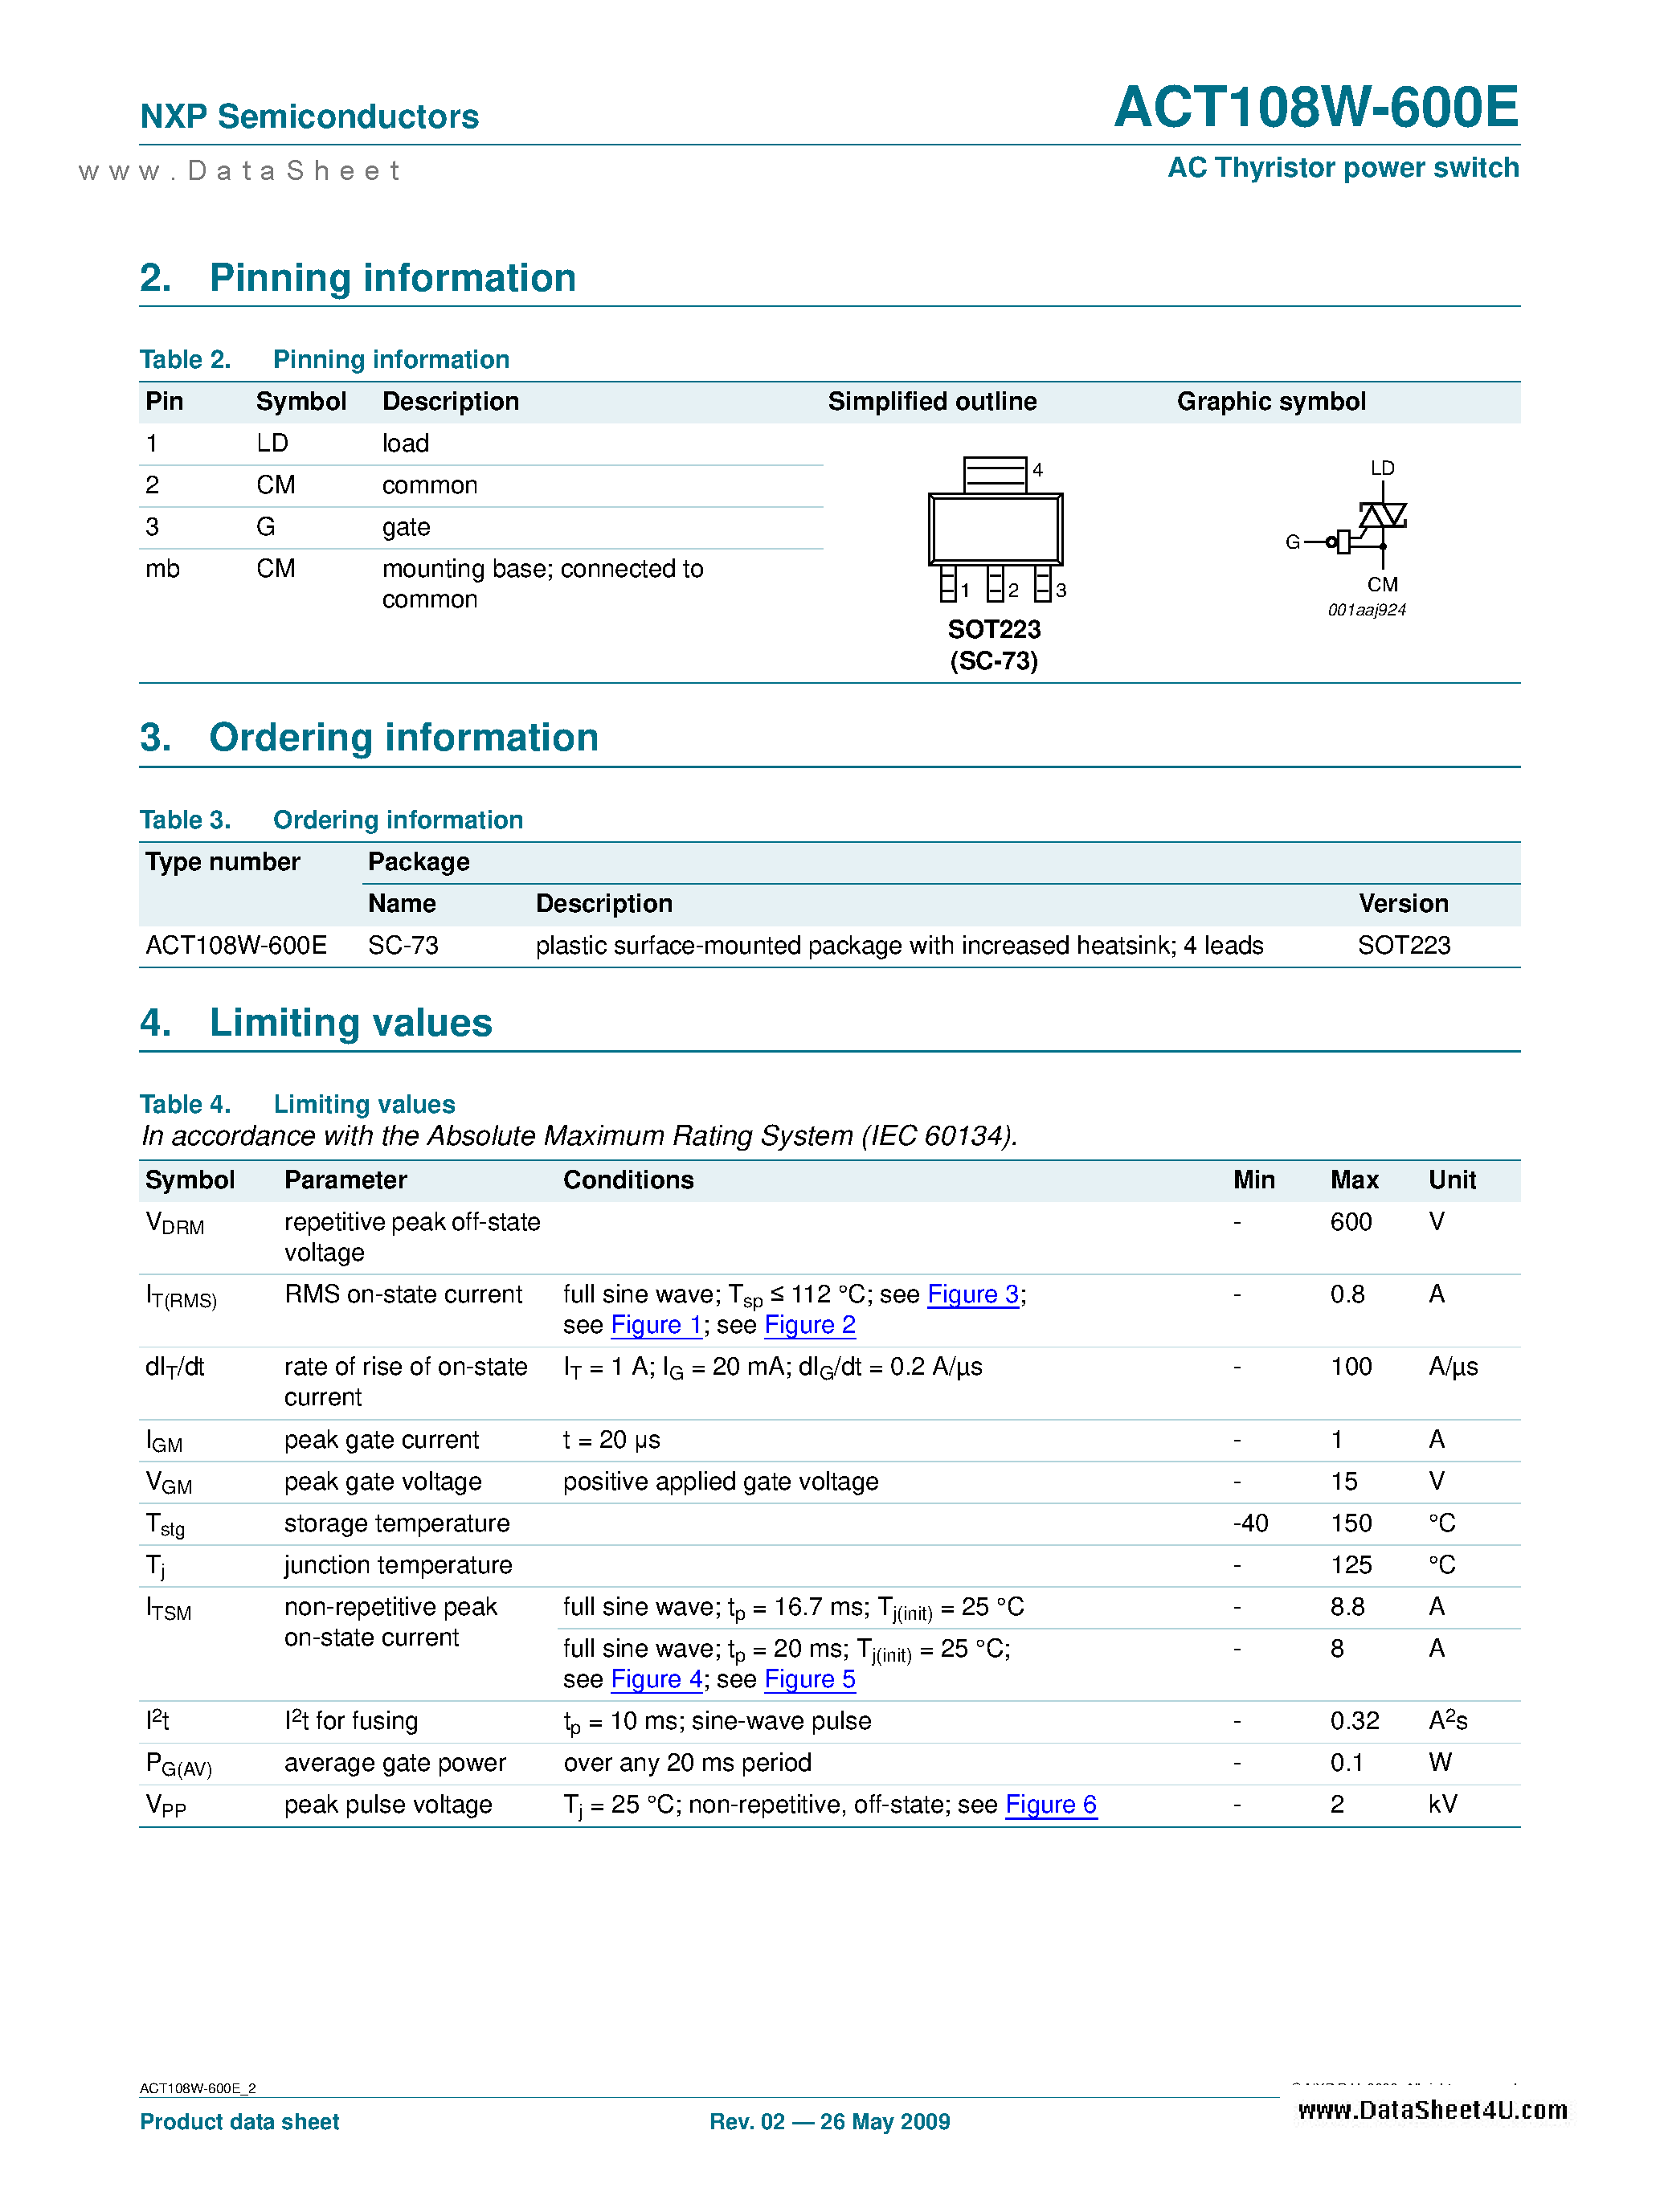 Datasheet ACT108W-600E - AC Thyristor Power Switch page 2